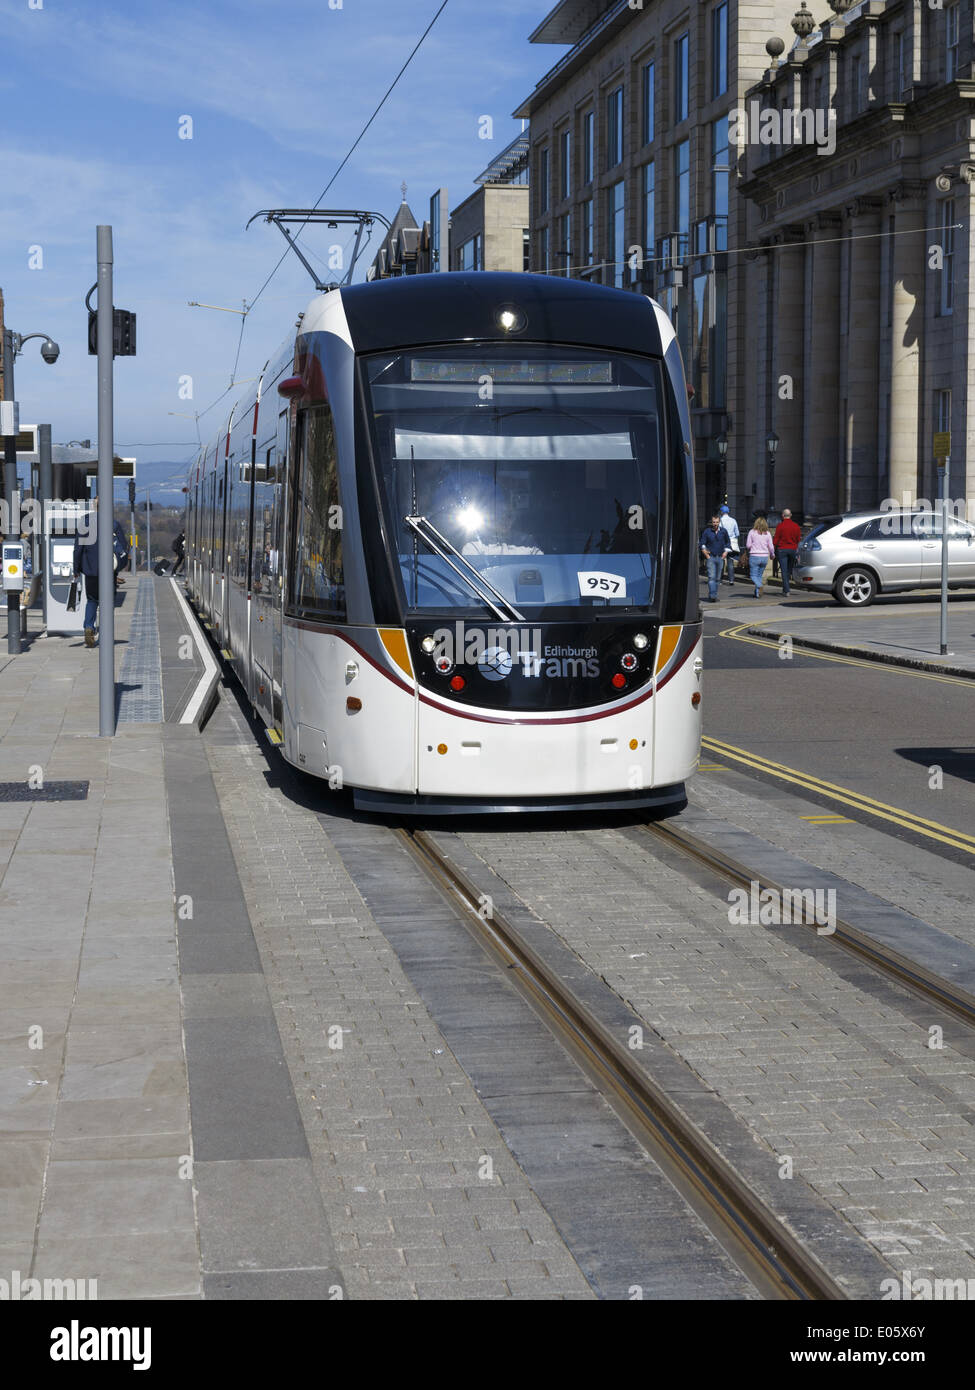 Edinburgh tram arrestato in corrispondenza della St Andrew Square stop. Foto Stock